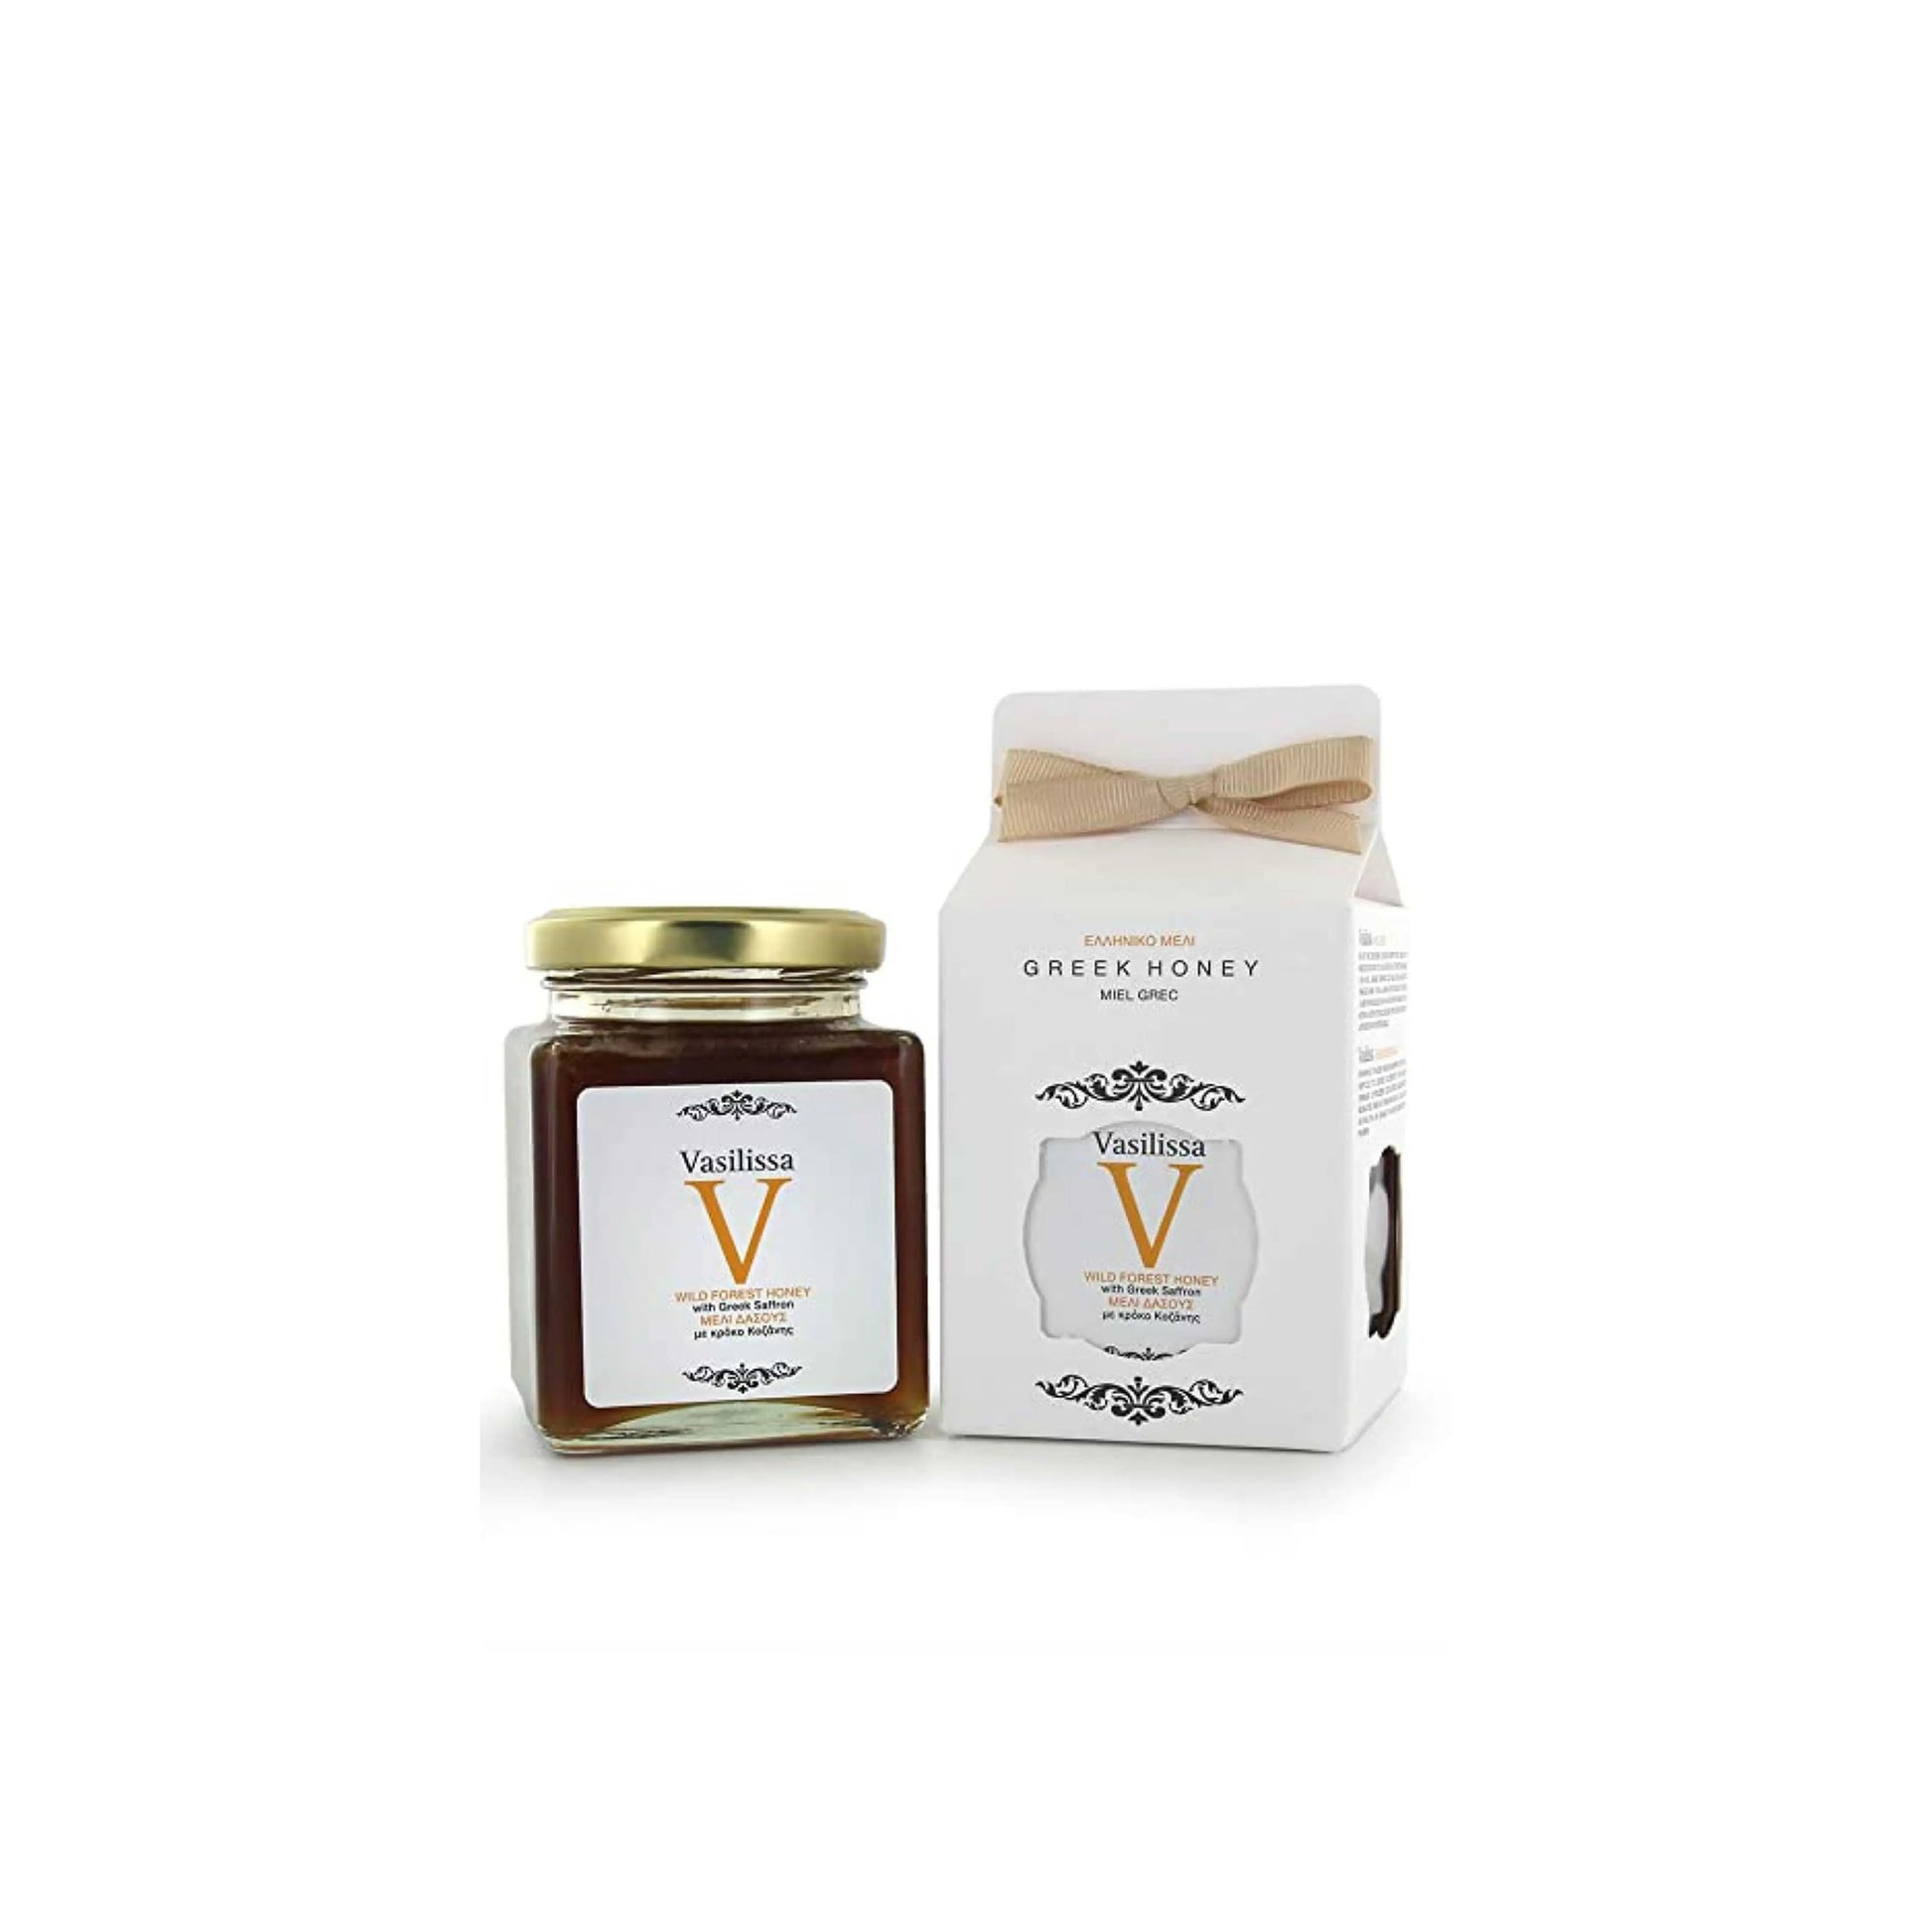 Honing met saffraan Griekenland 250g Vasilissa (vloeibaar) - Honingwinkel